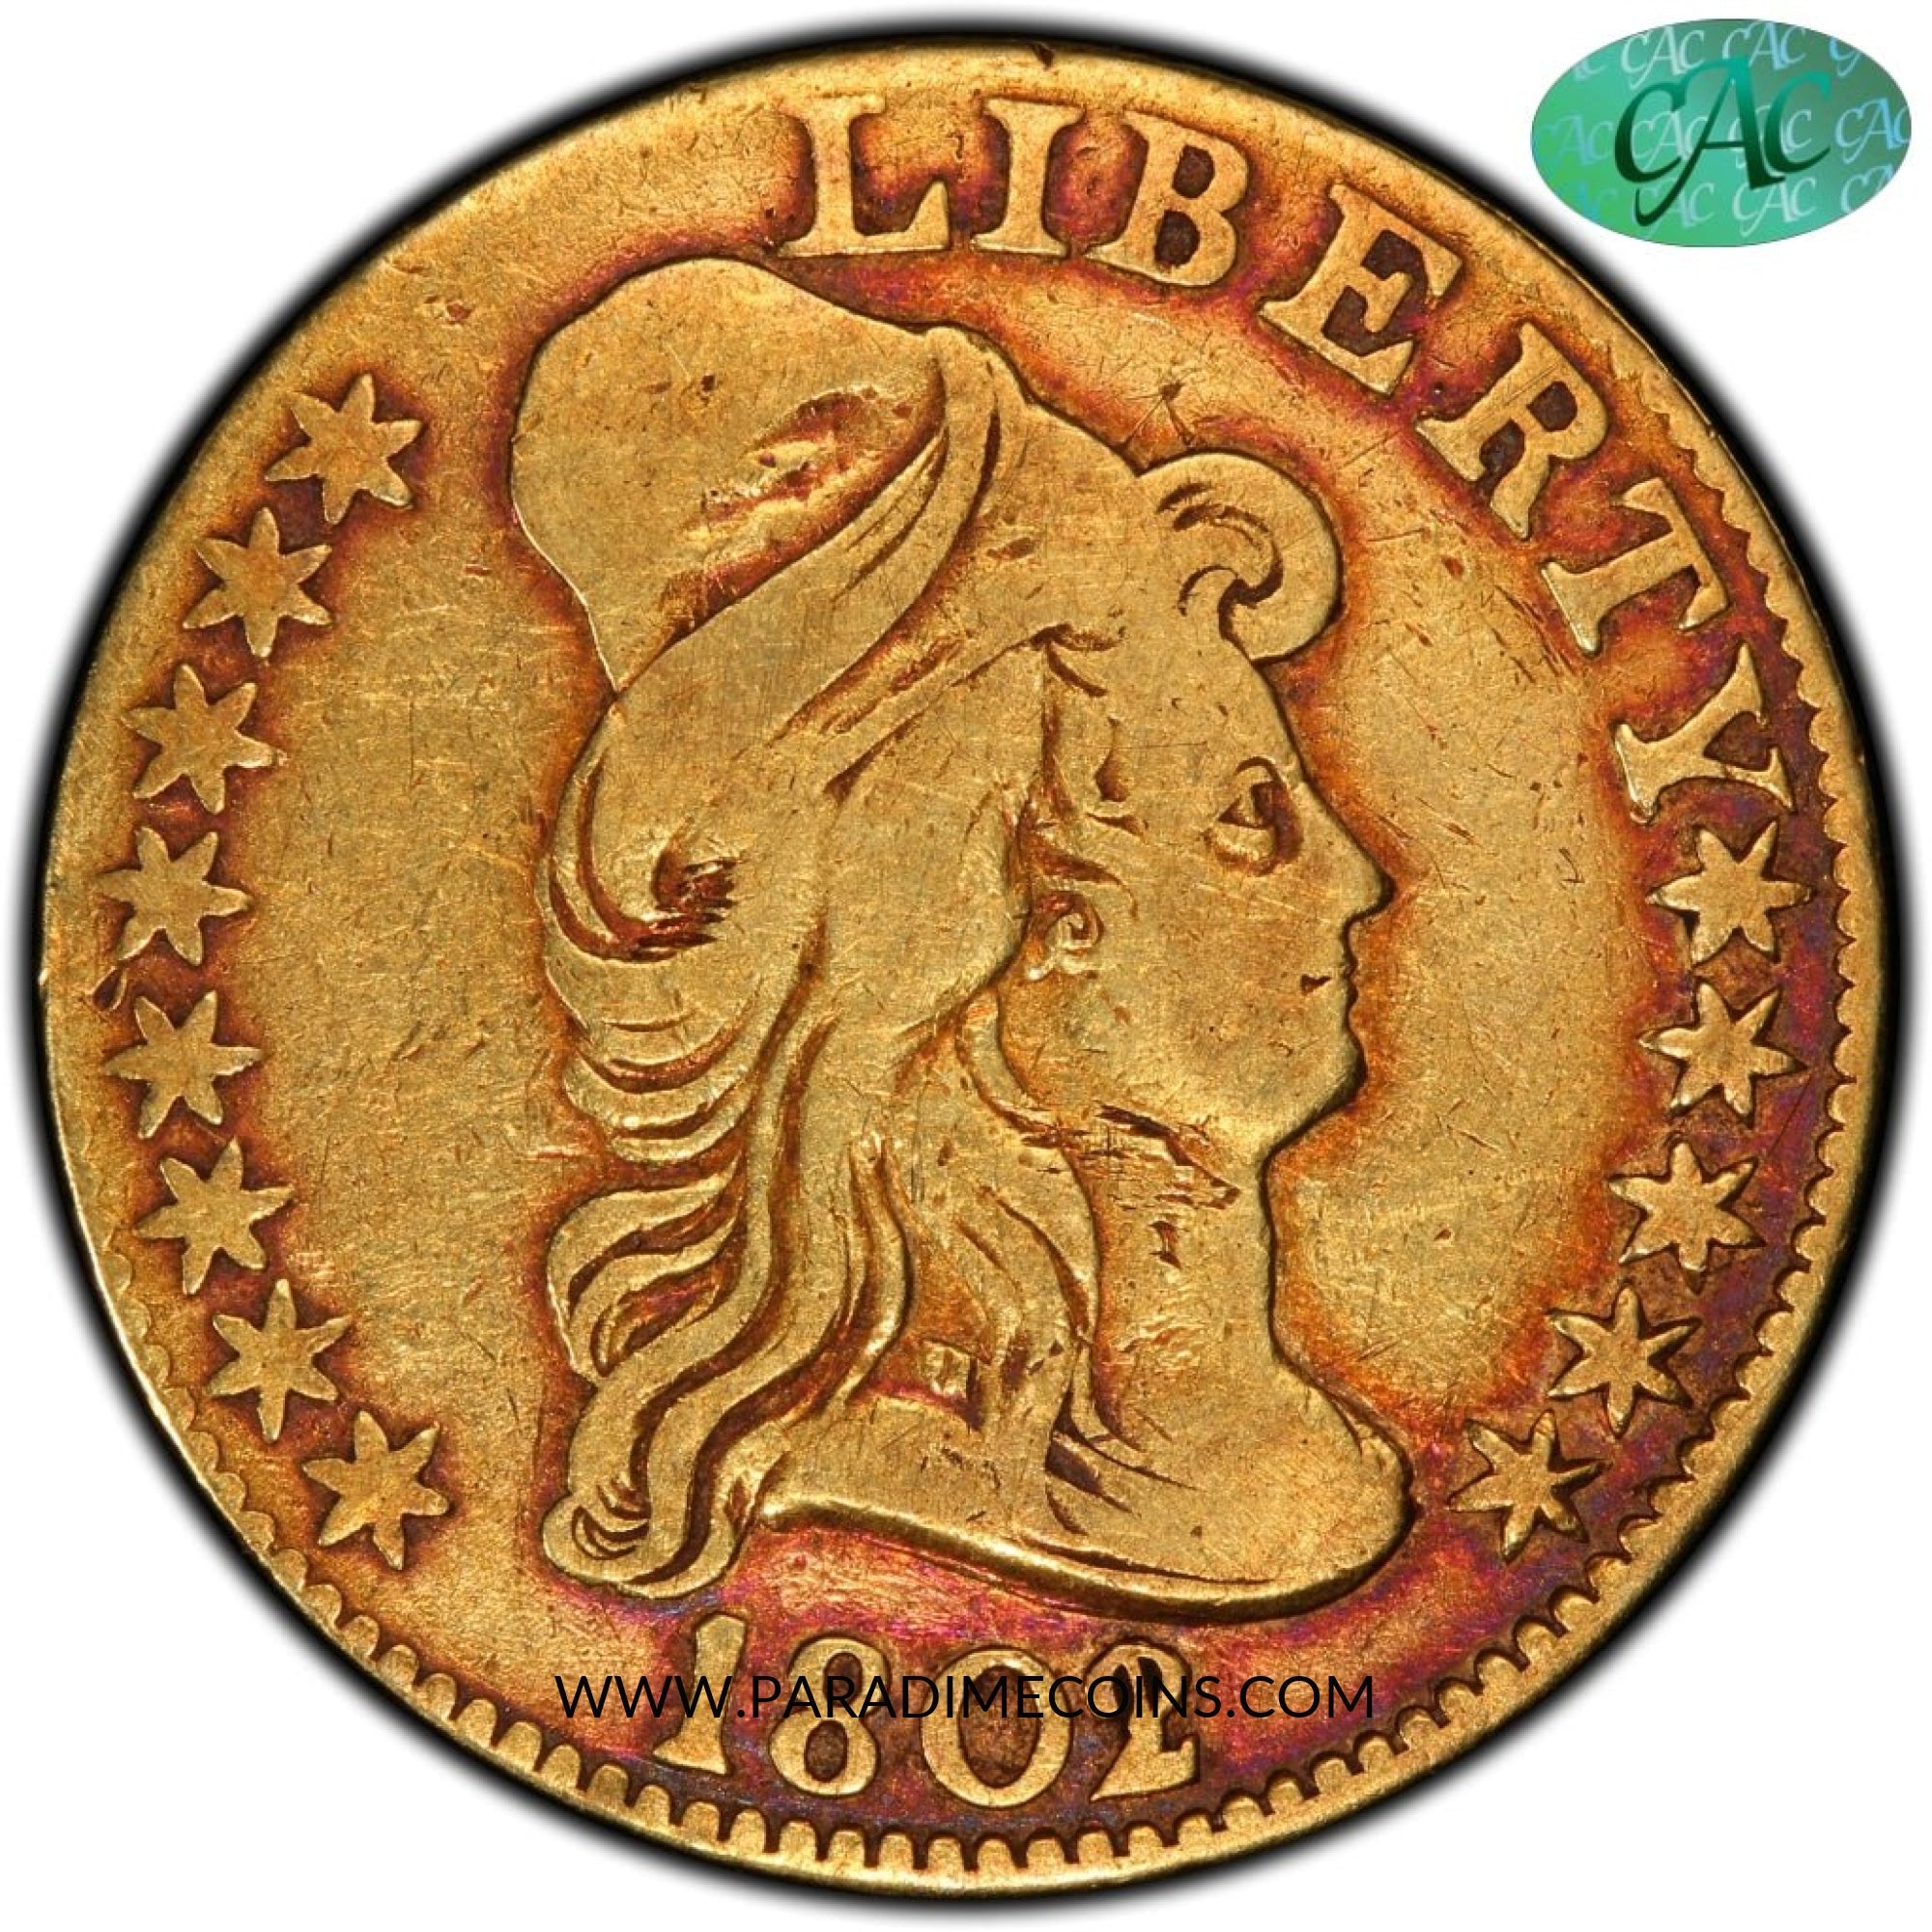 1802/1 $5 F12 PCGS CAC - Paradime Coins | PCGS NGC CACG CAC Rare US Numismatic Coins For Sale